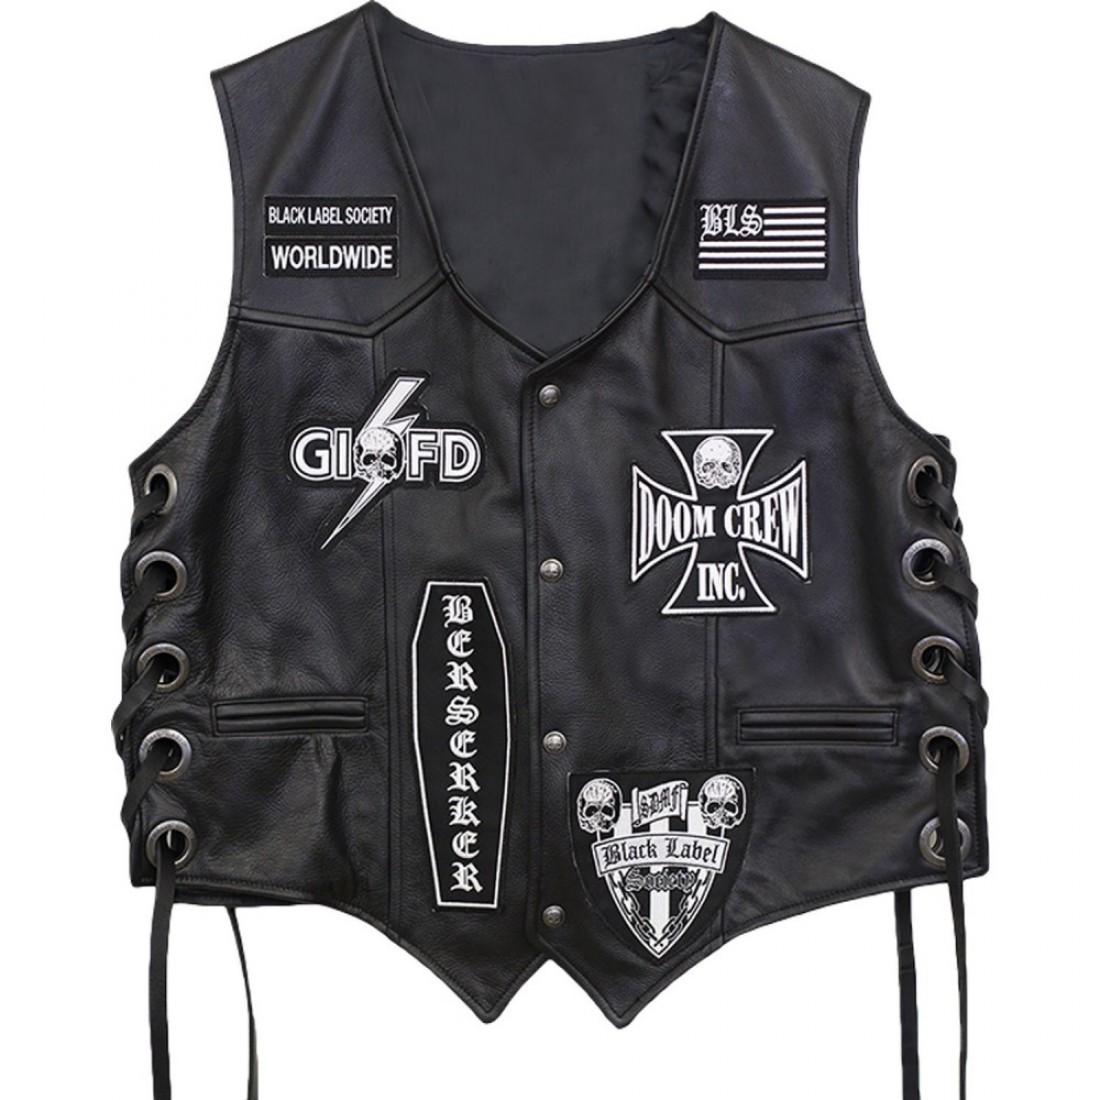 black label society leather vest